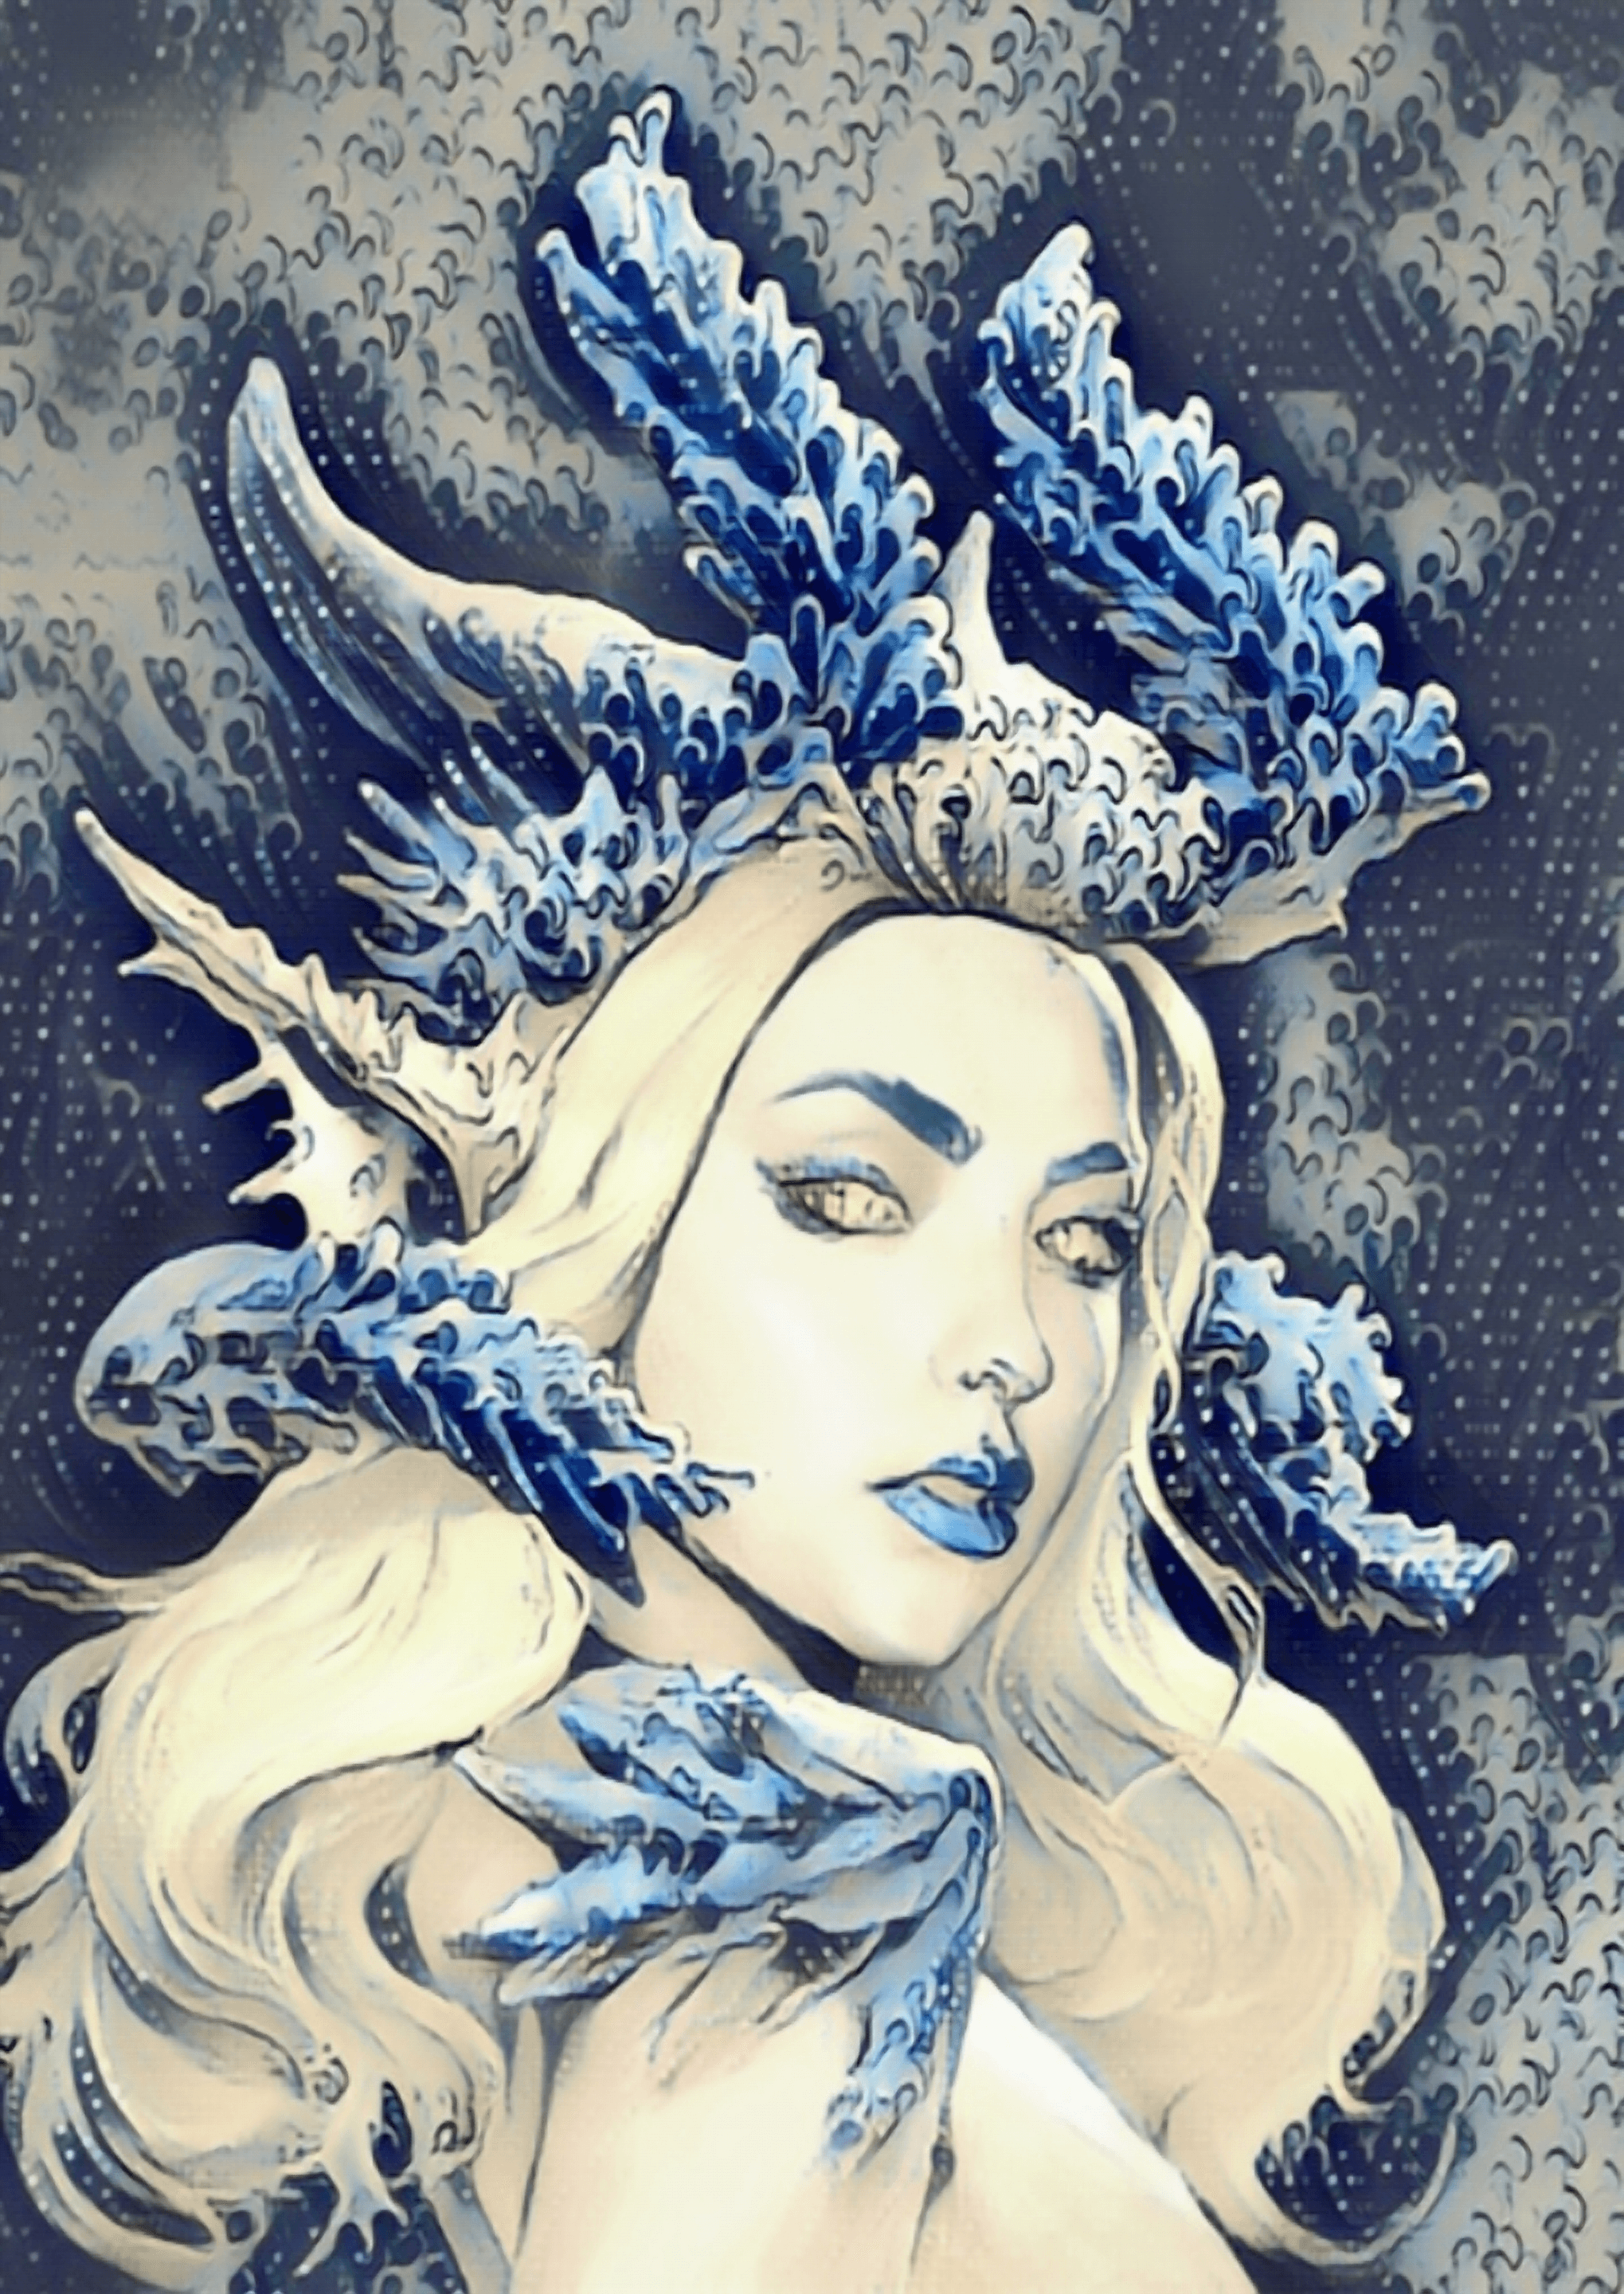 Queen of Thorns #2 Art NFT